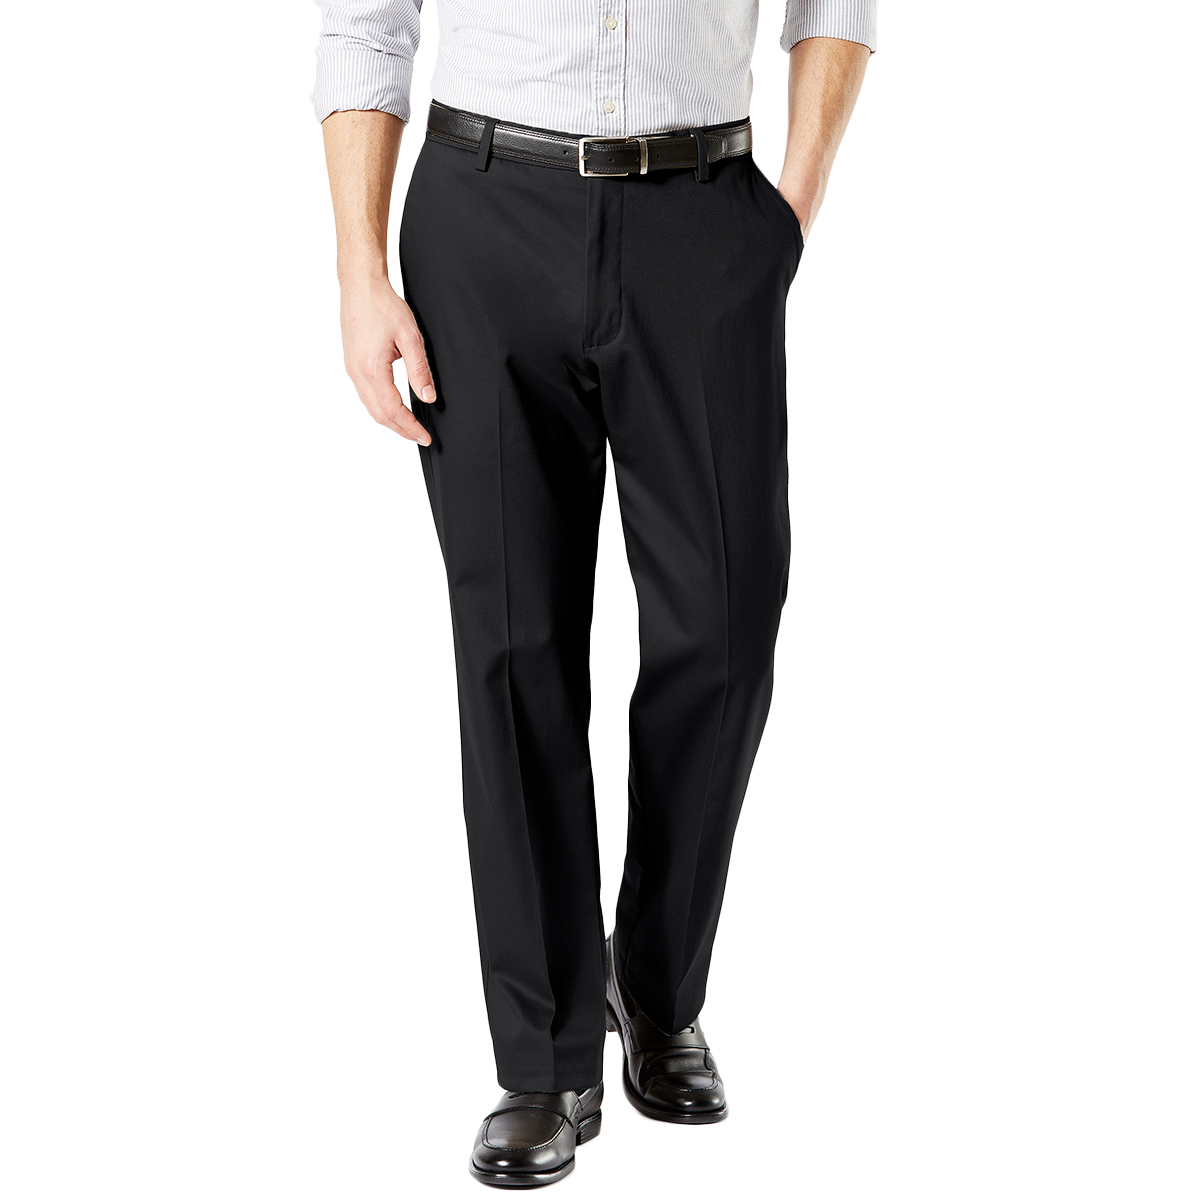 Dockers Men's Classic Fit Signature Khaki 2.0 Flat-Front Stretch Crease Pants - Black, 38/30